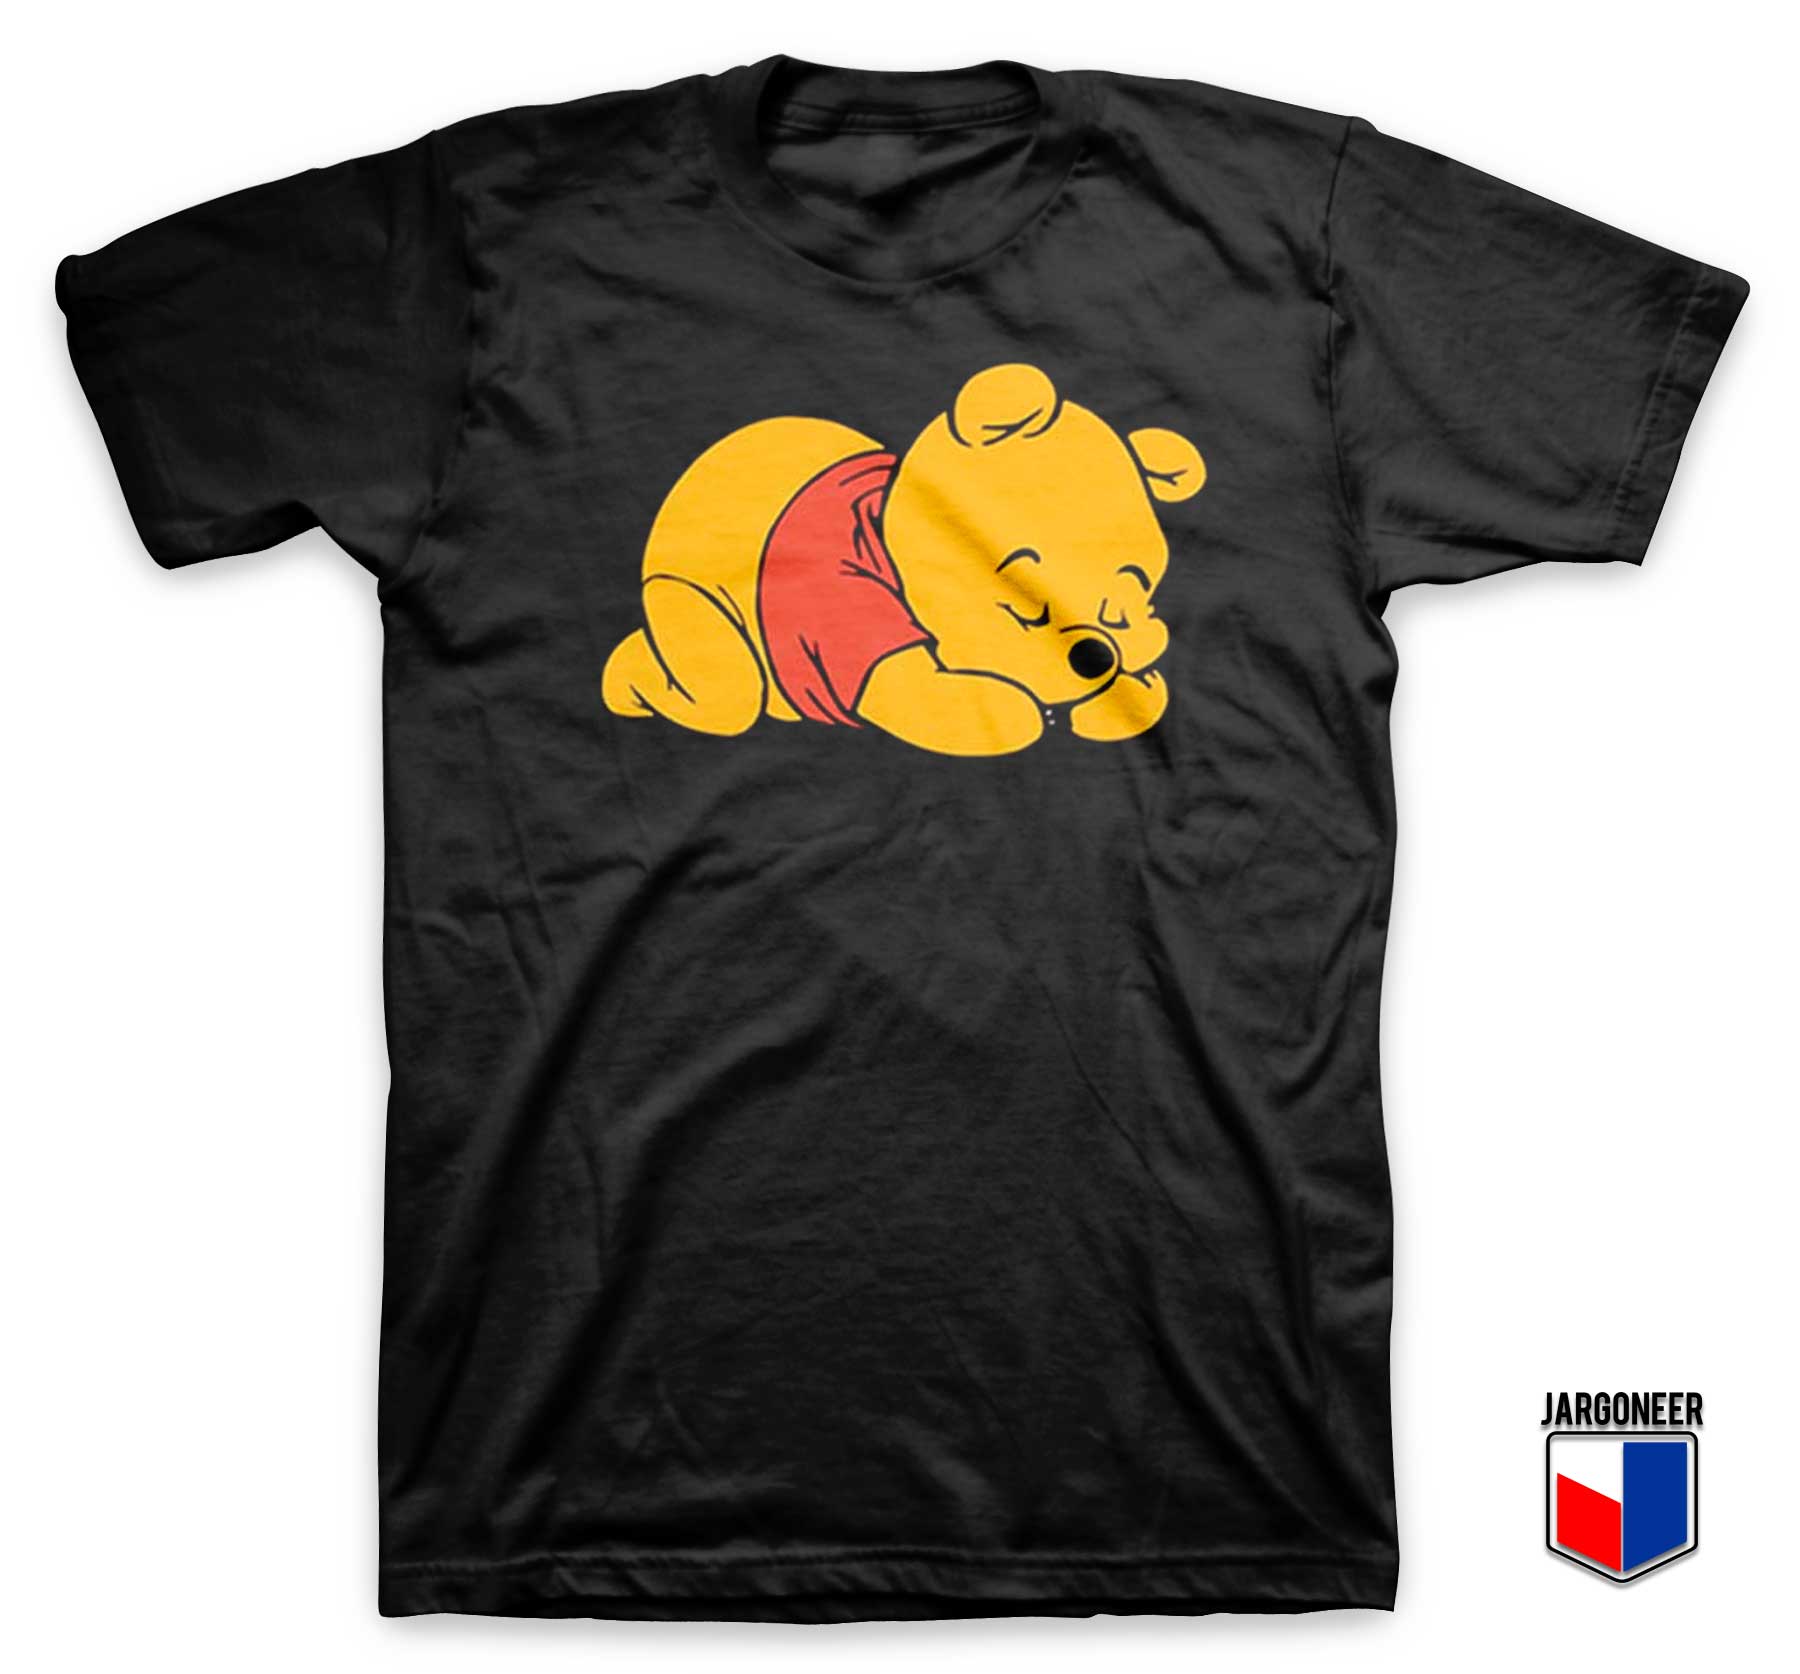 Winnie the Pooh Cartoon T Shirt - Shop Unique Graphic Cool Shirt Designs